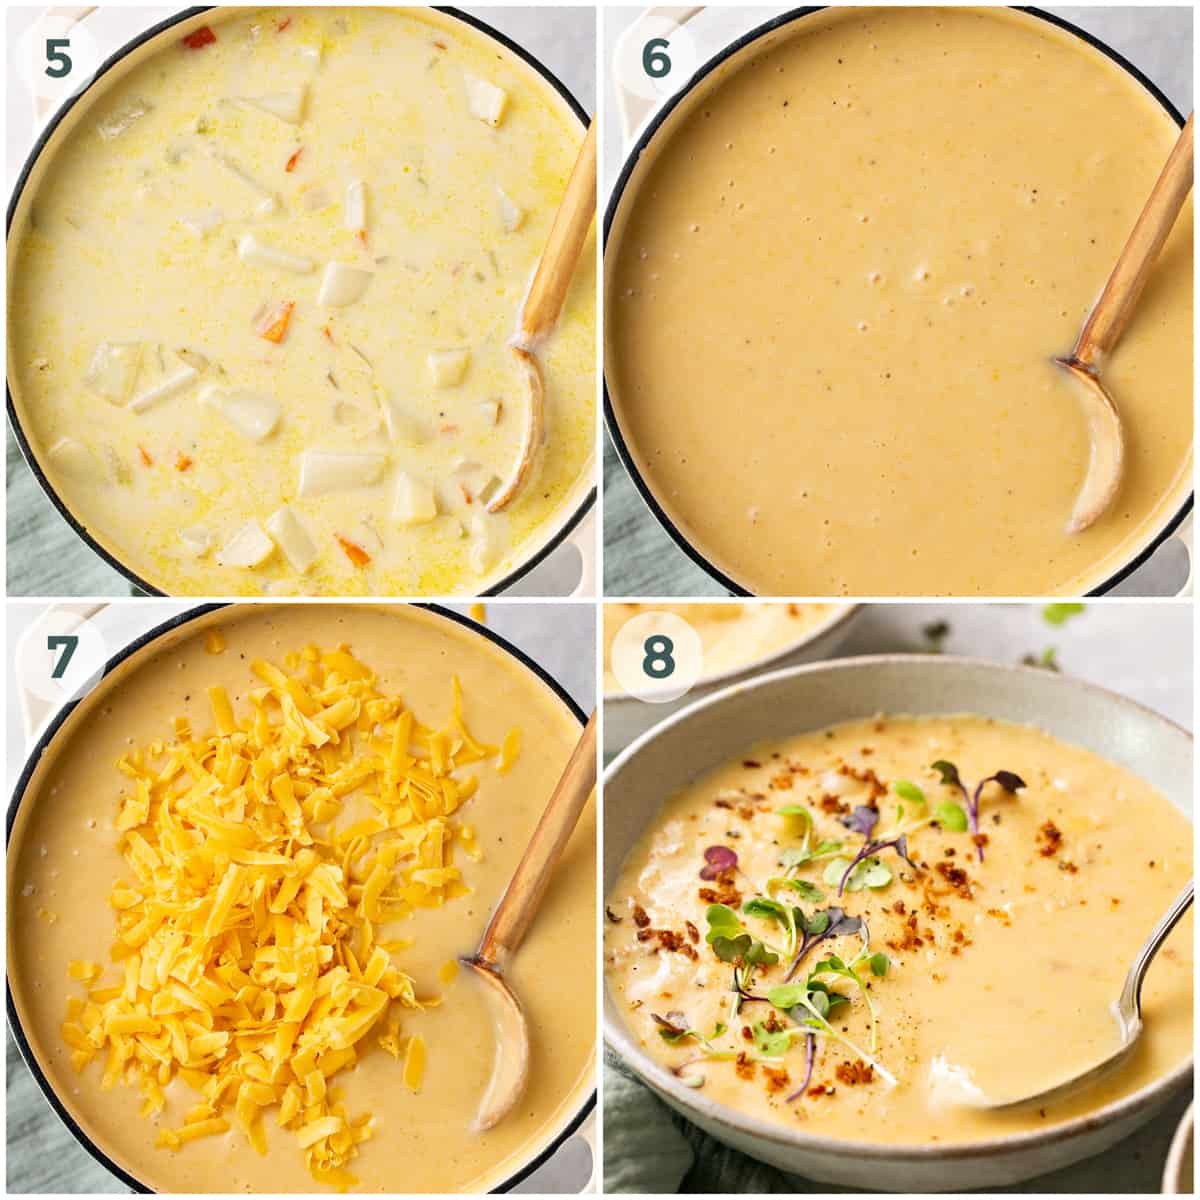 steps 5-8 of preparing potato soup recipe